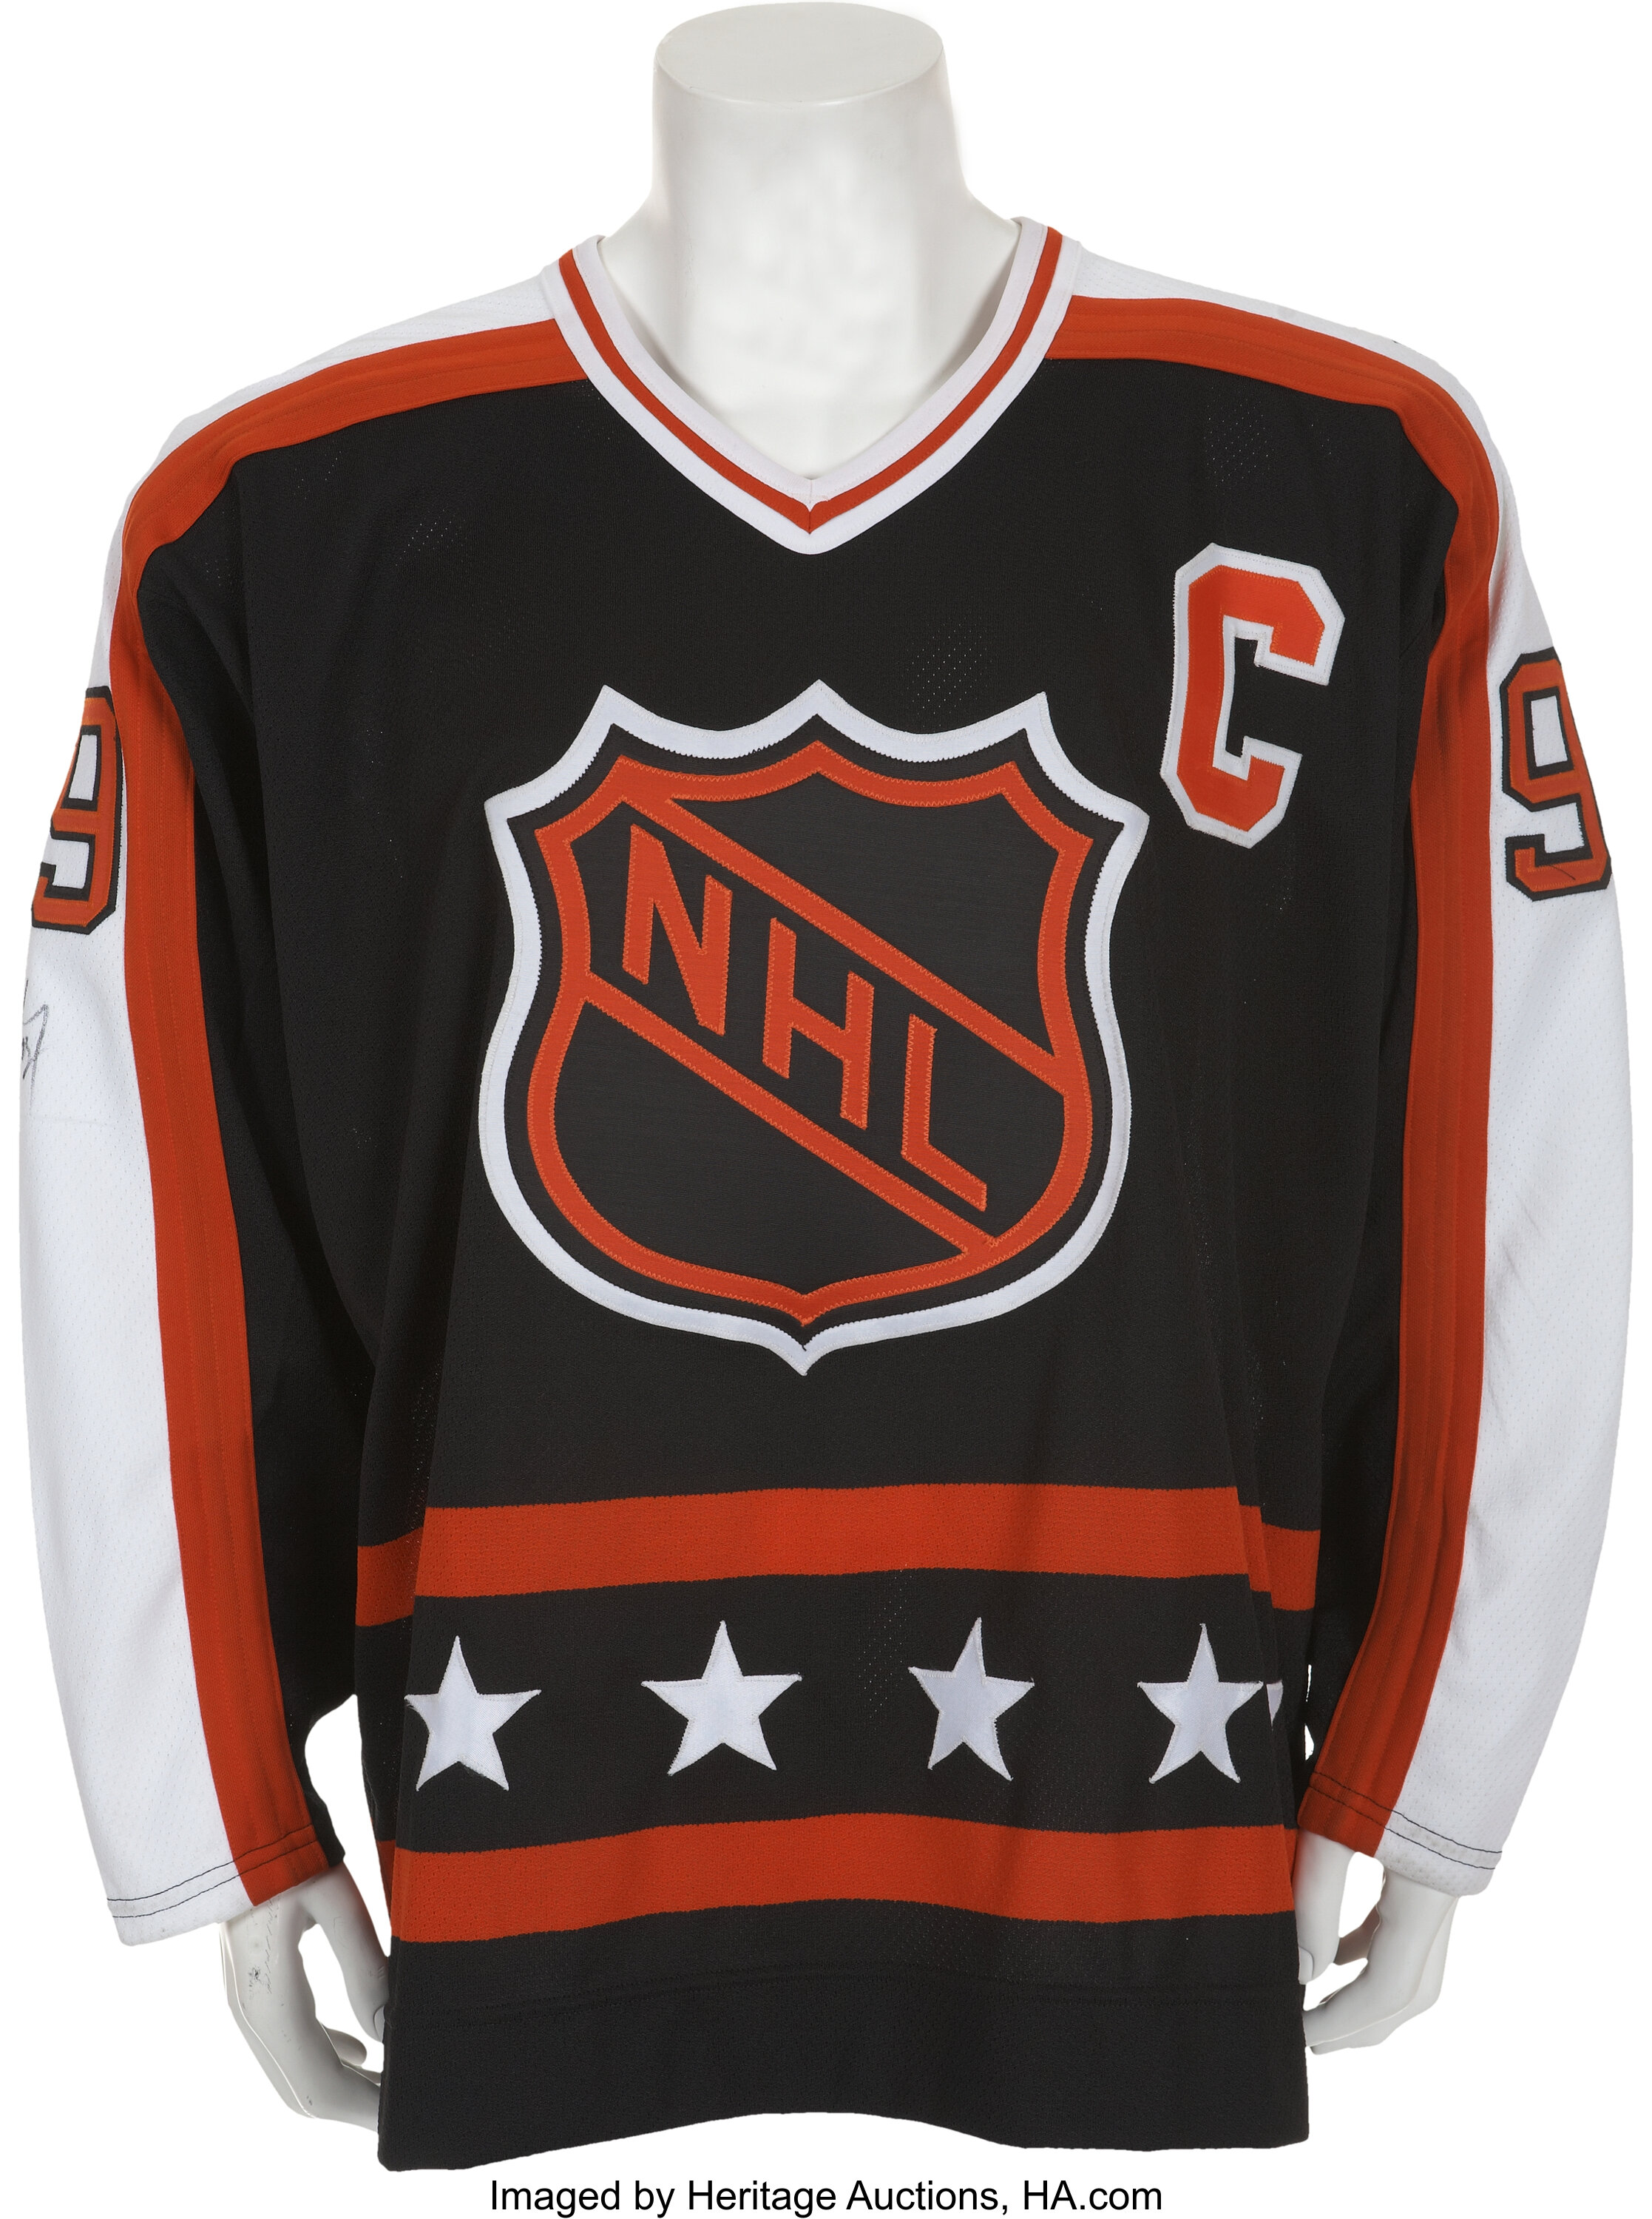 90s hockey jersey - Gem